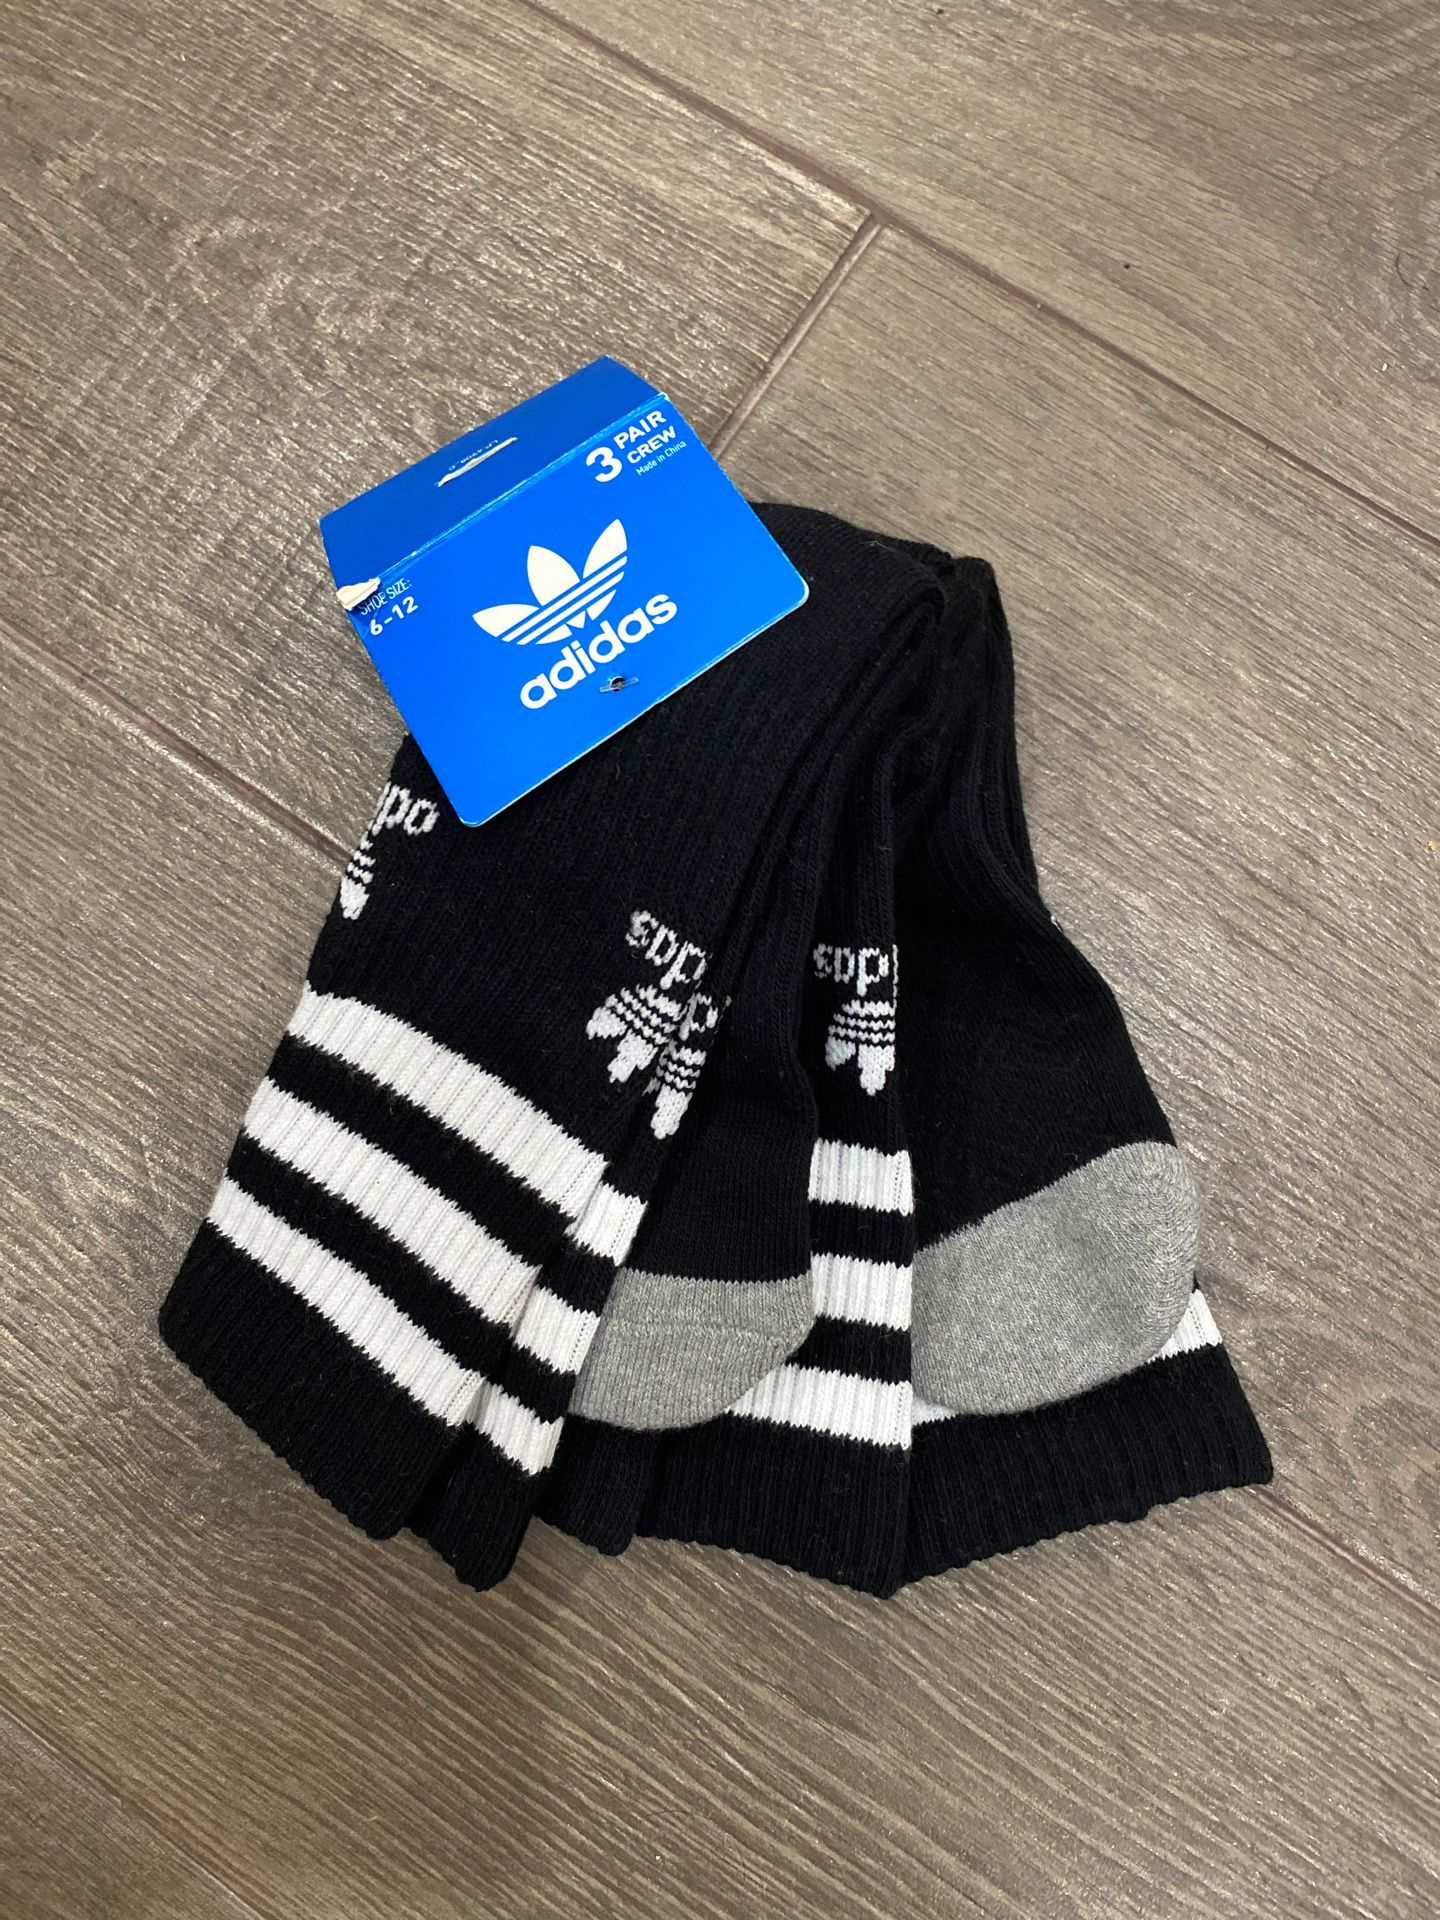 Brand New Adidas 3 Pair Crew Socks